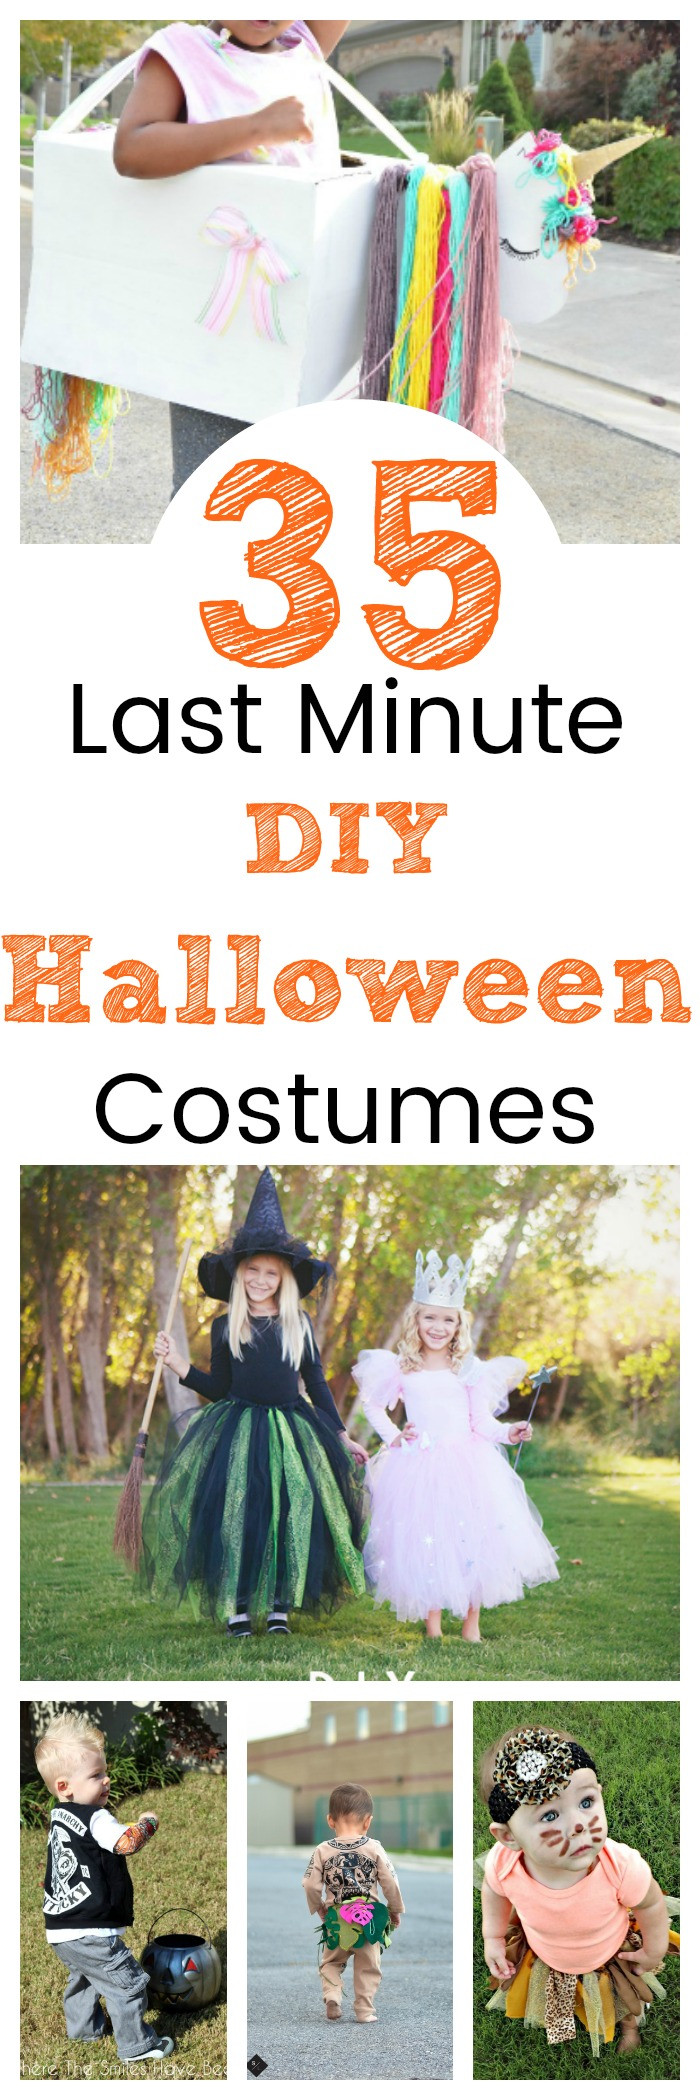 Last Minute DIY Costume
 35 Last Minute DIY Halloween Costumes